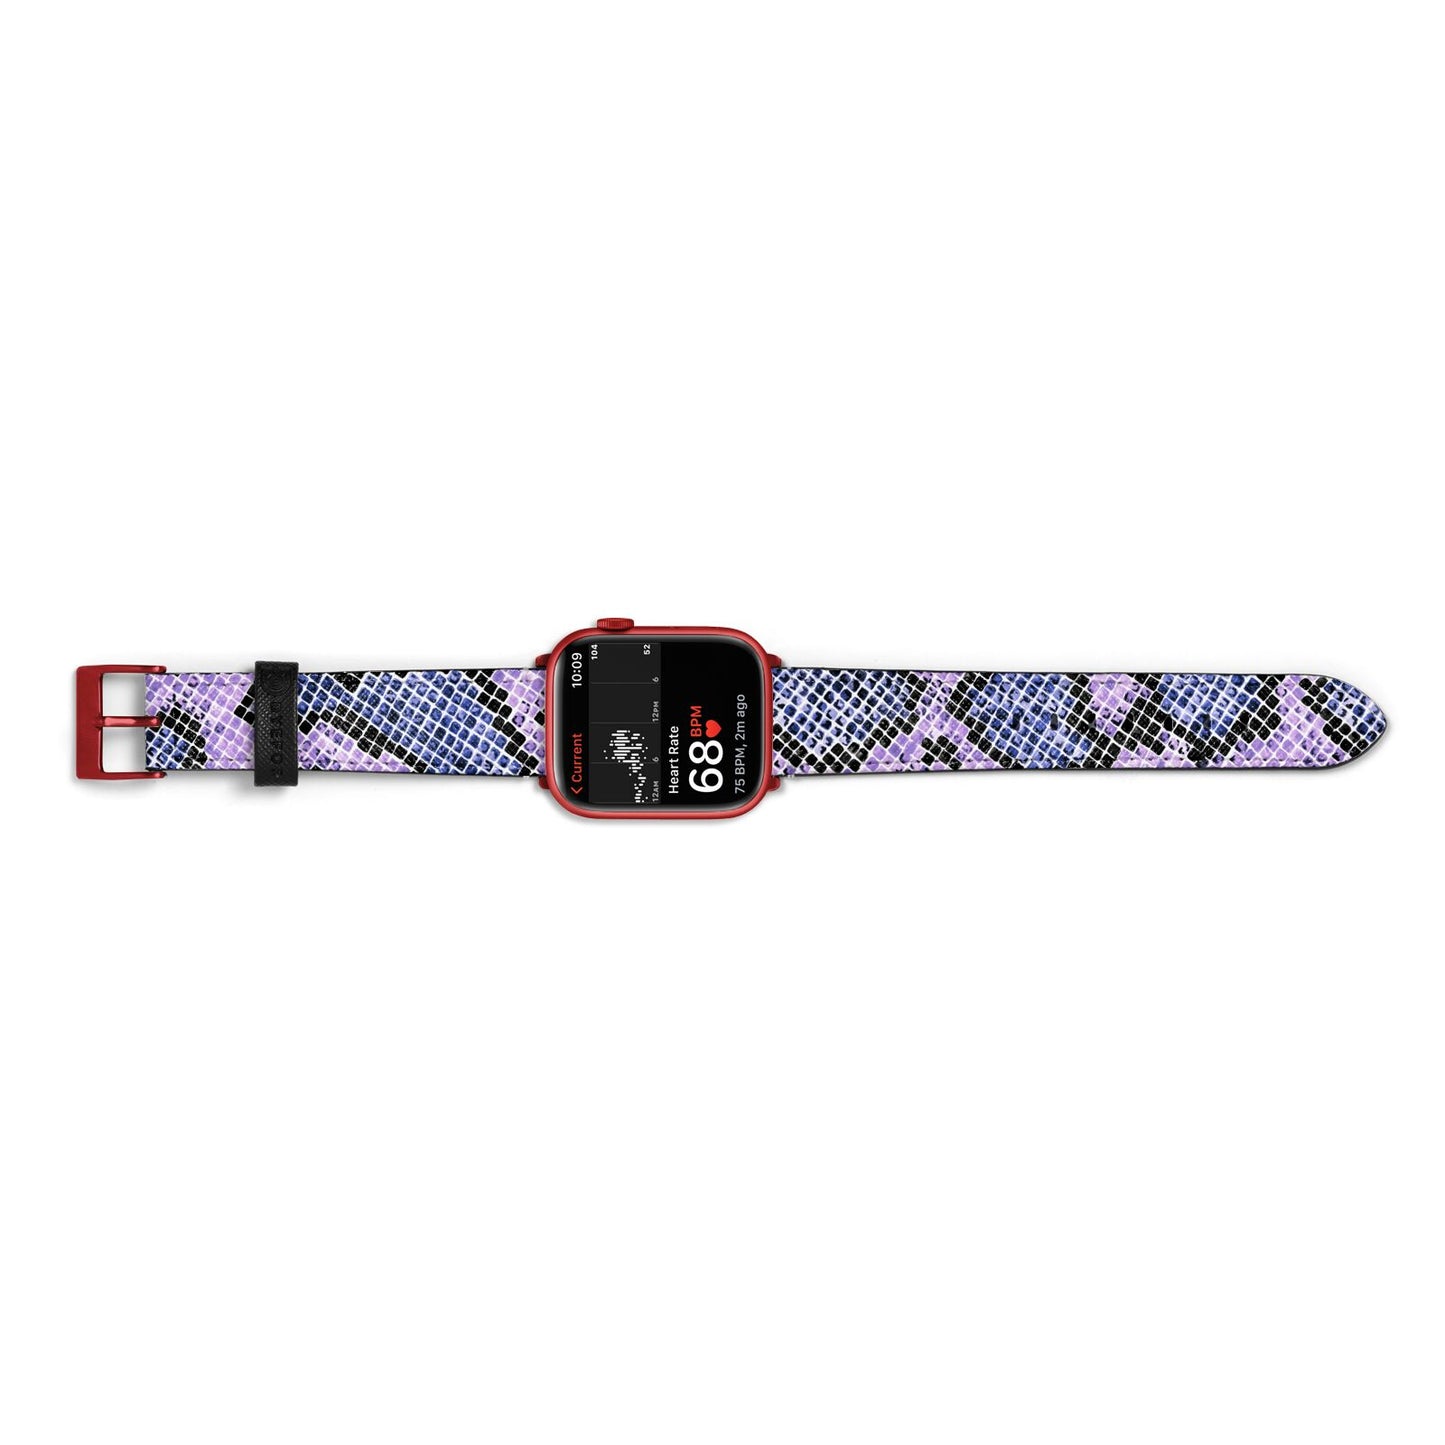 Purple And Blue Snakeskin Apple Watch Strap Size 38mm Landscape Image Red Hardware